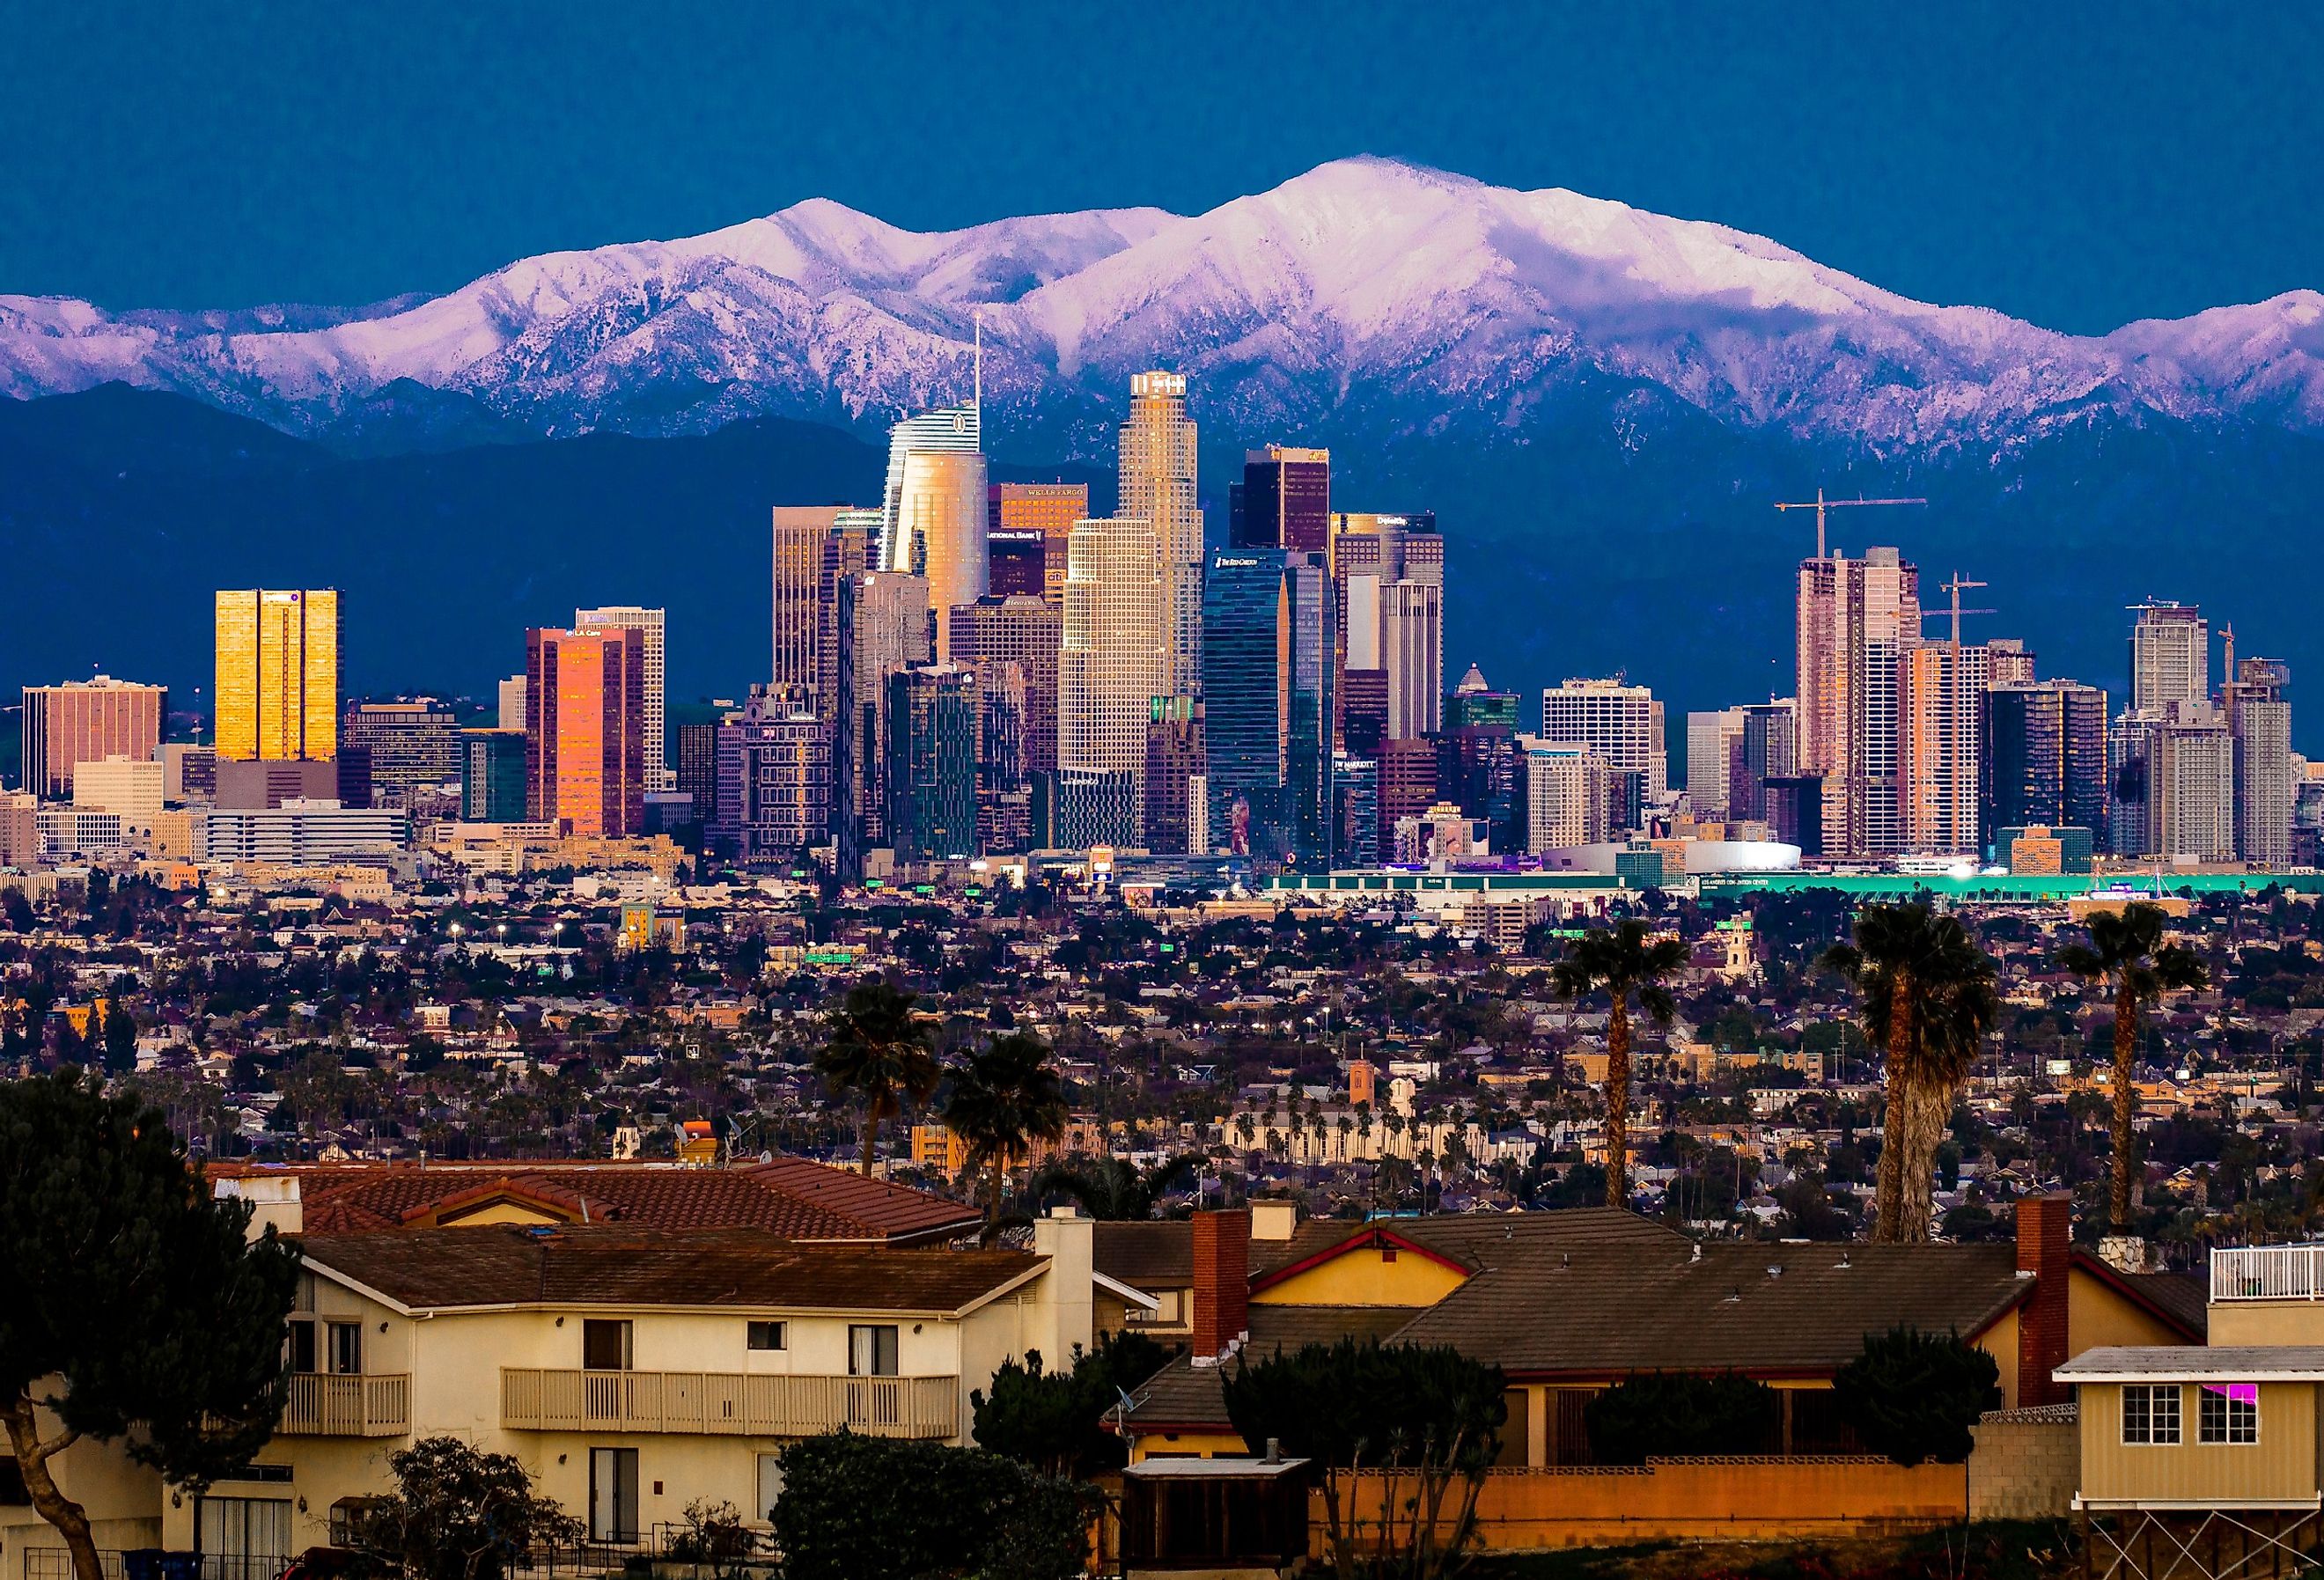 Los Angeles Skyline framed by San Bernadino Mountains. Image credit Joseph Sohm via Shutterstock